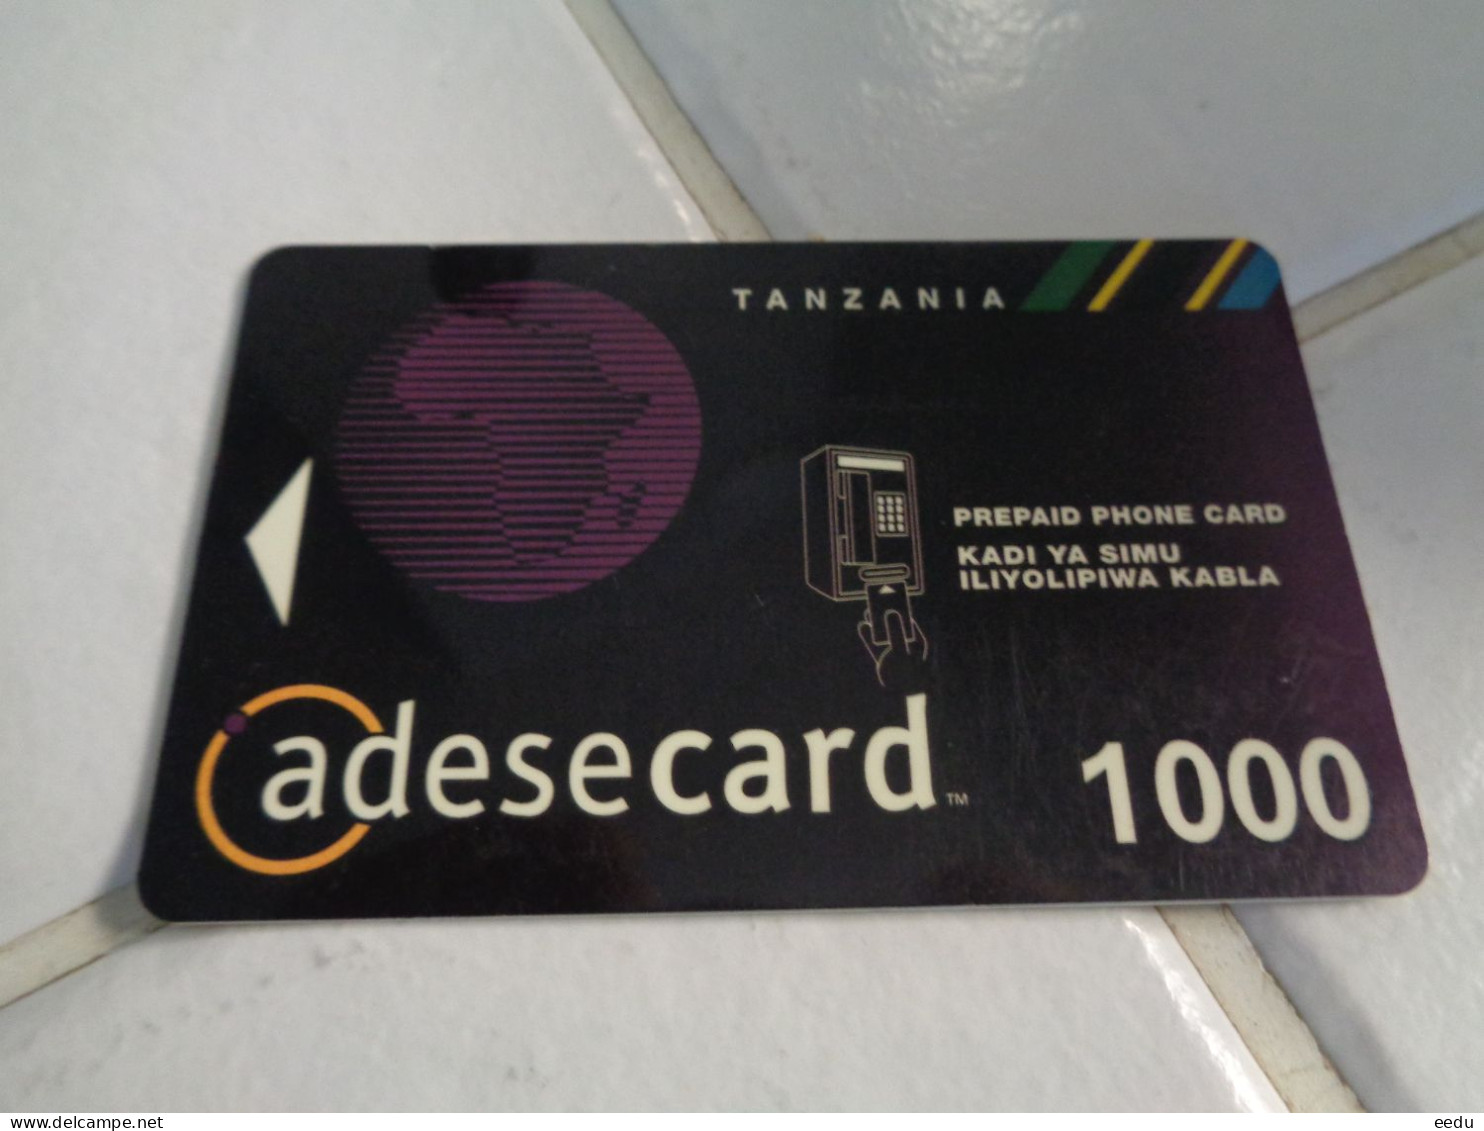 Tanzania Phonecard - Tanzania